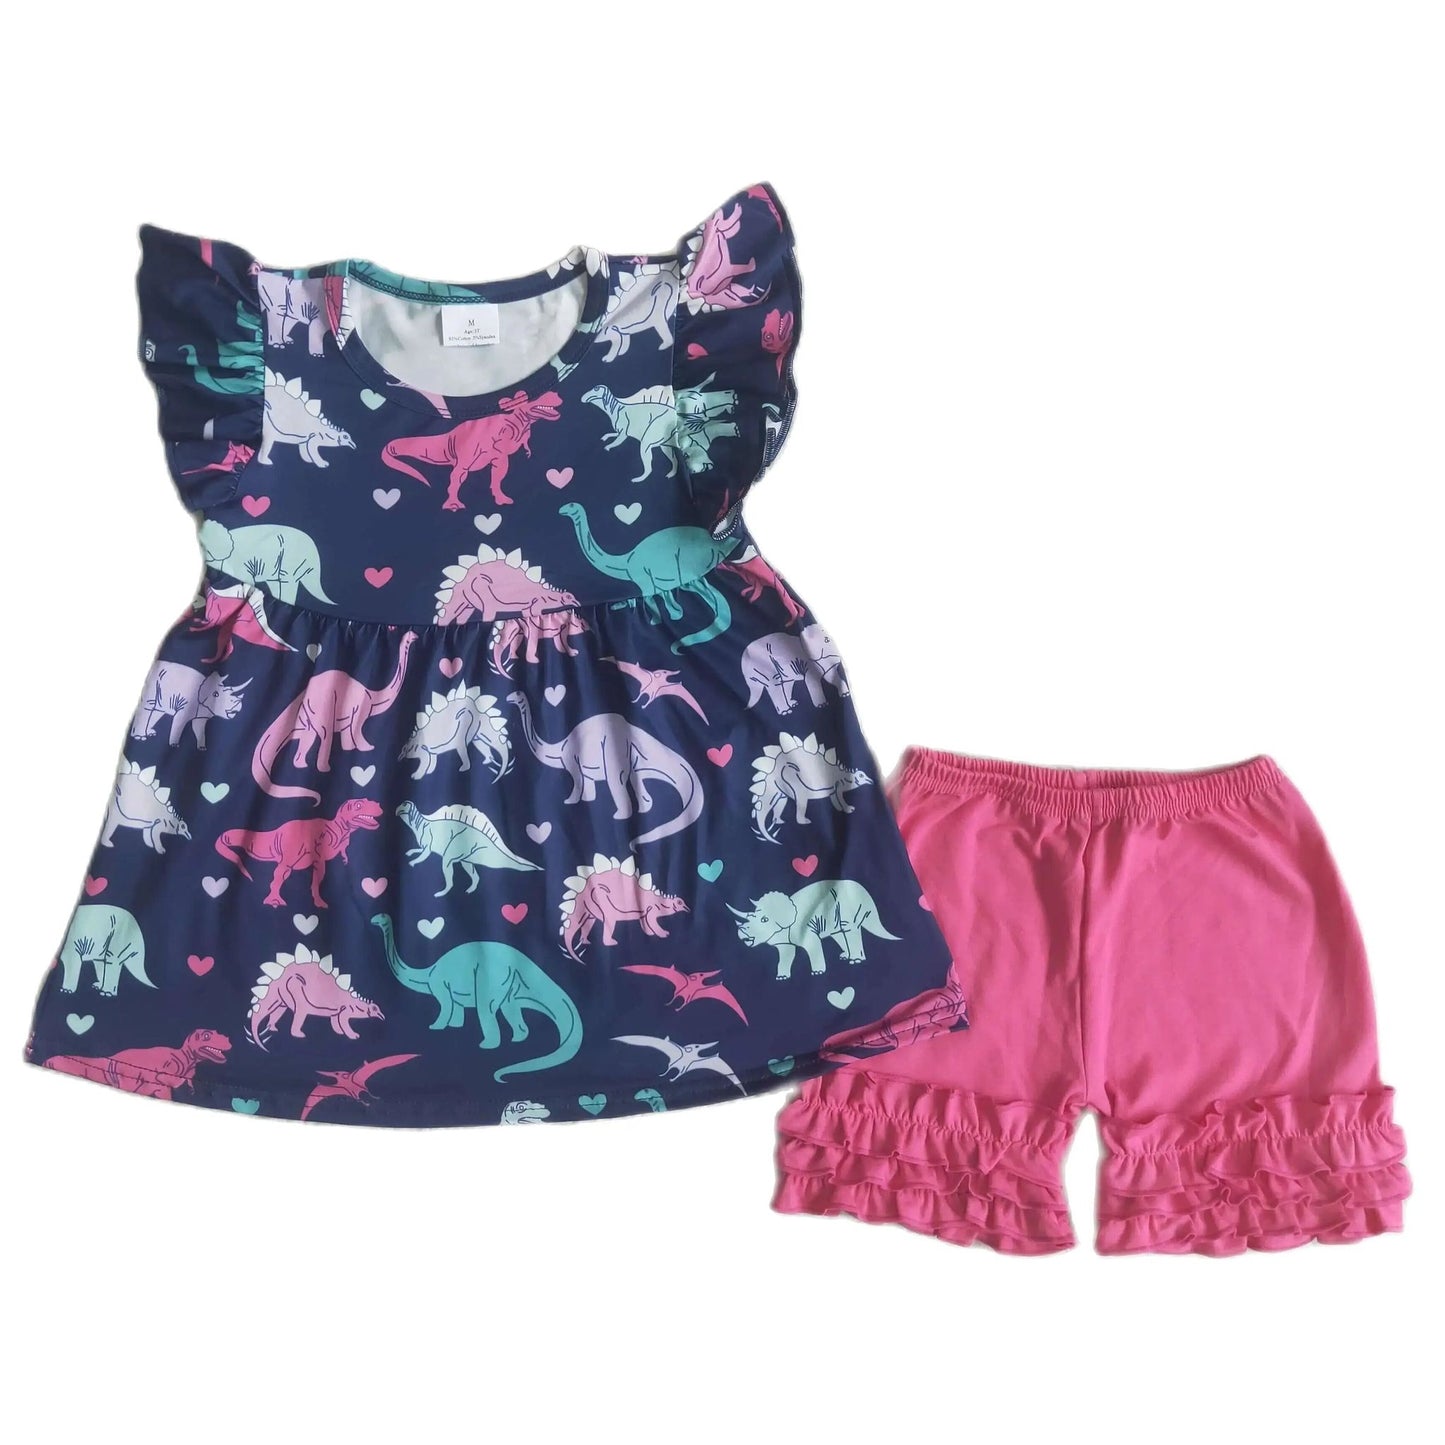 Dinosaur Hearts Ruffle Shorts Outfit